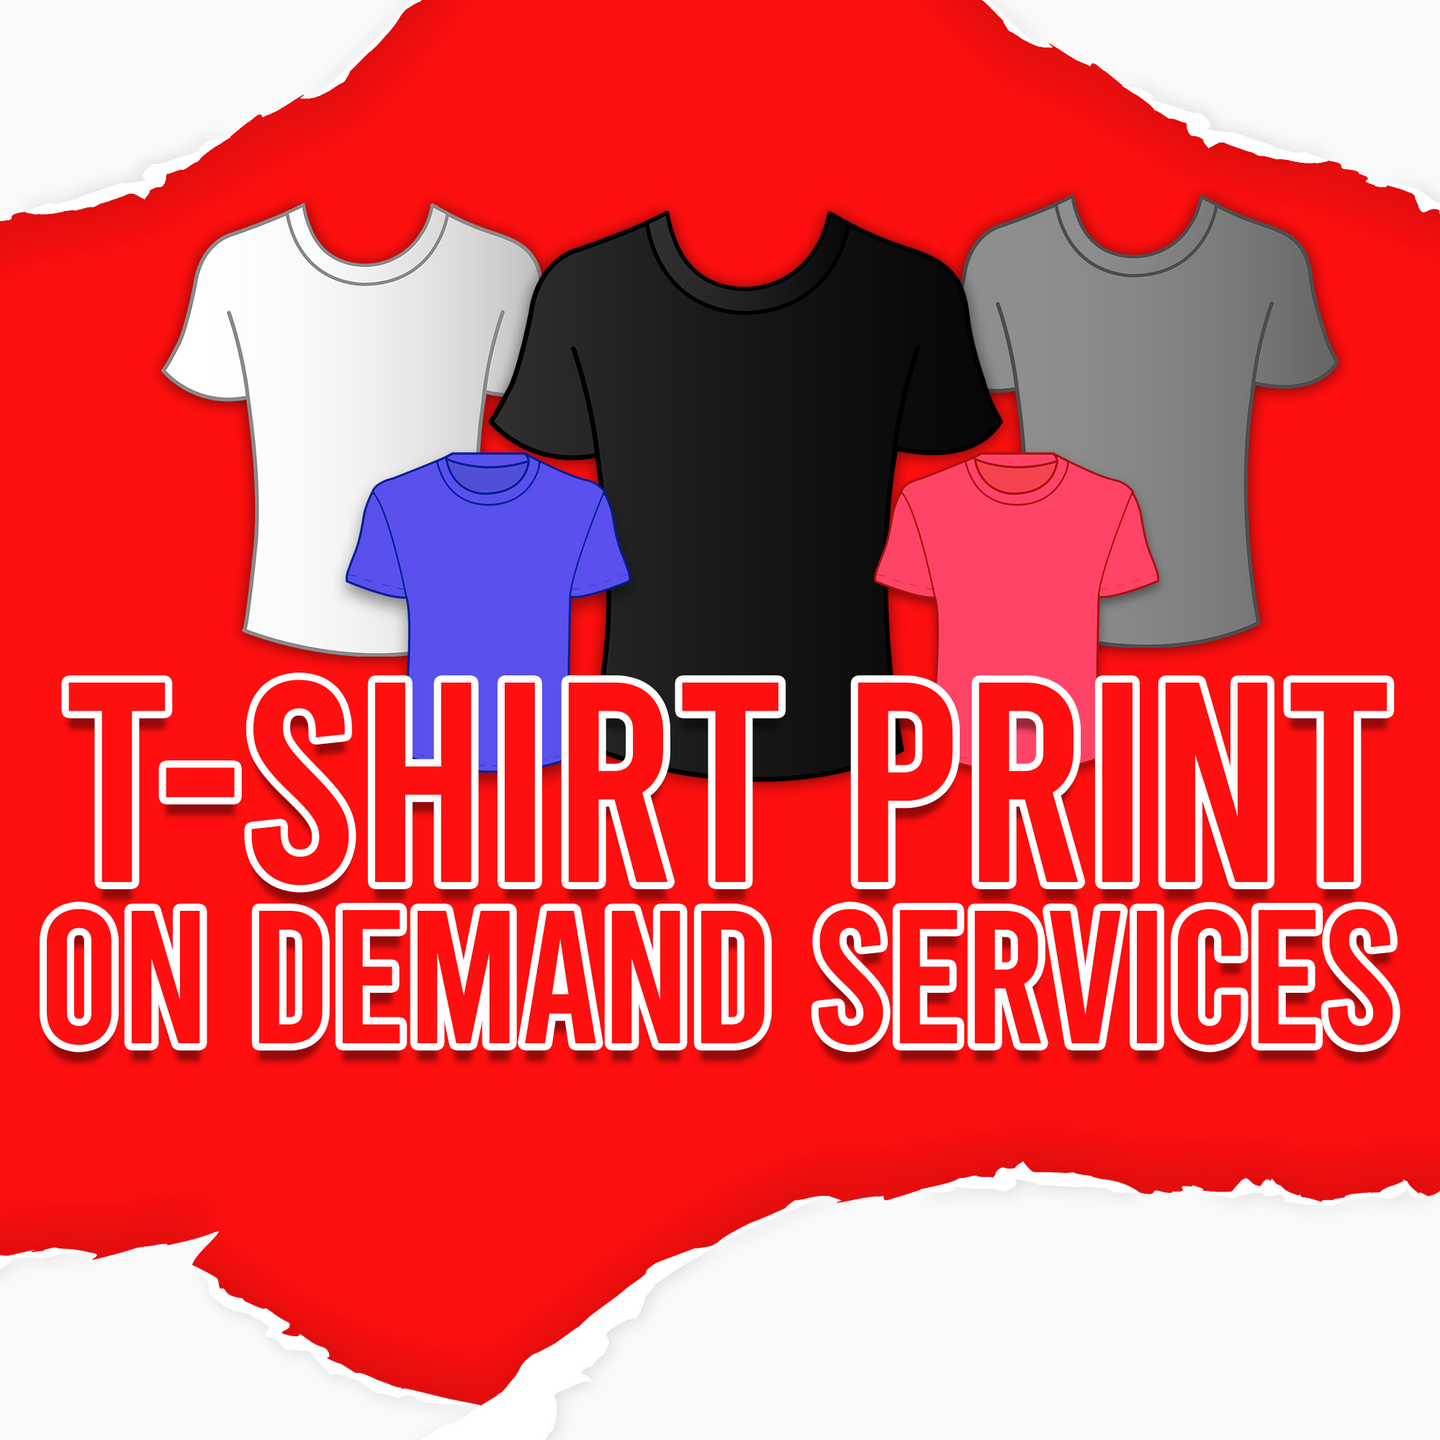 Print On Demand Services